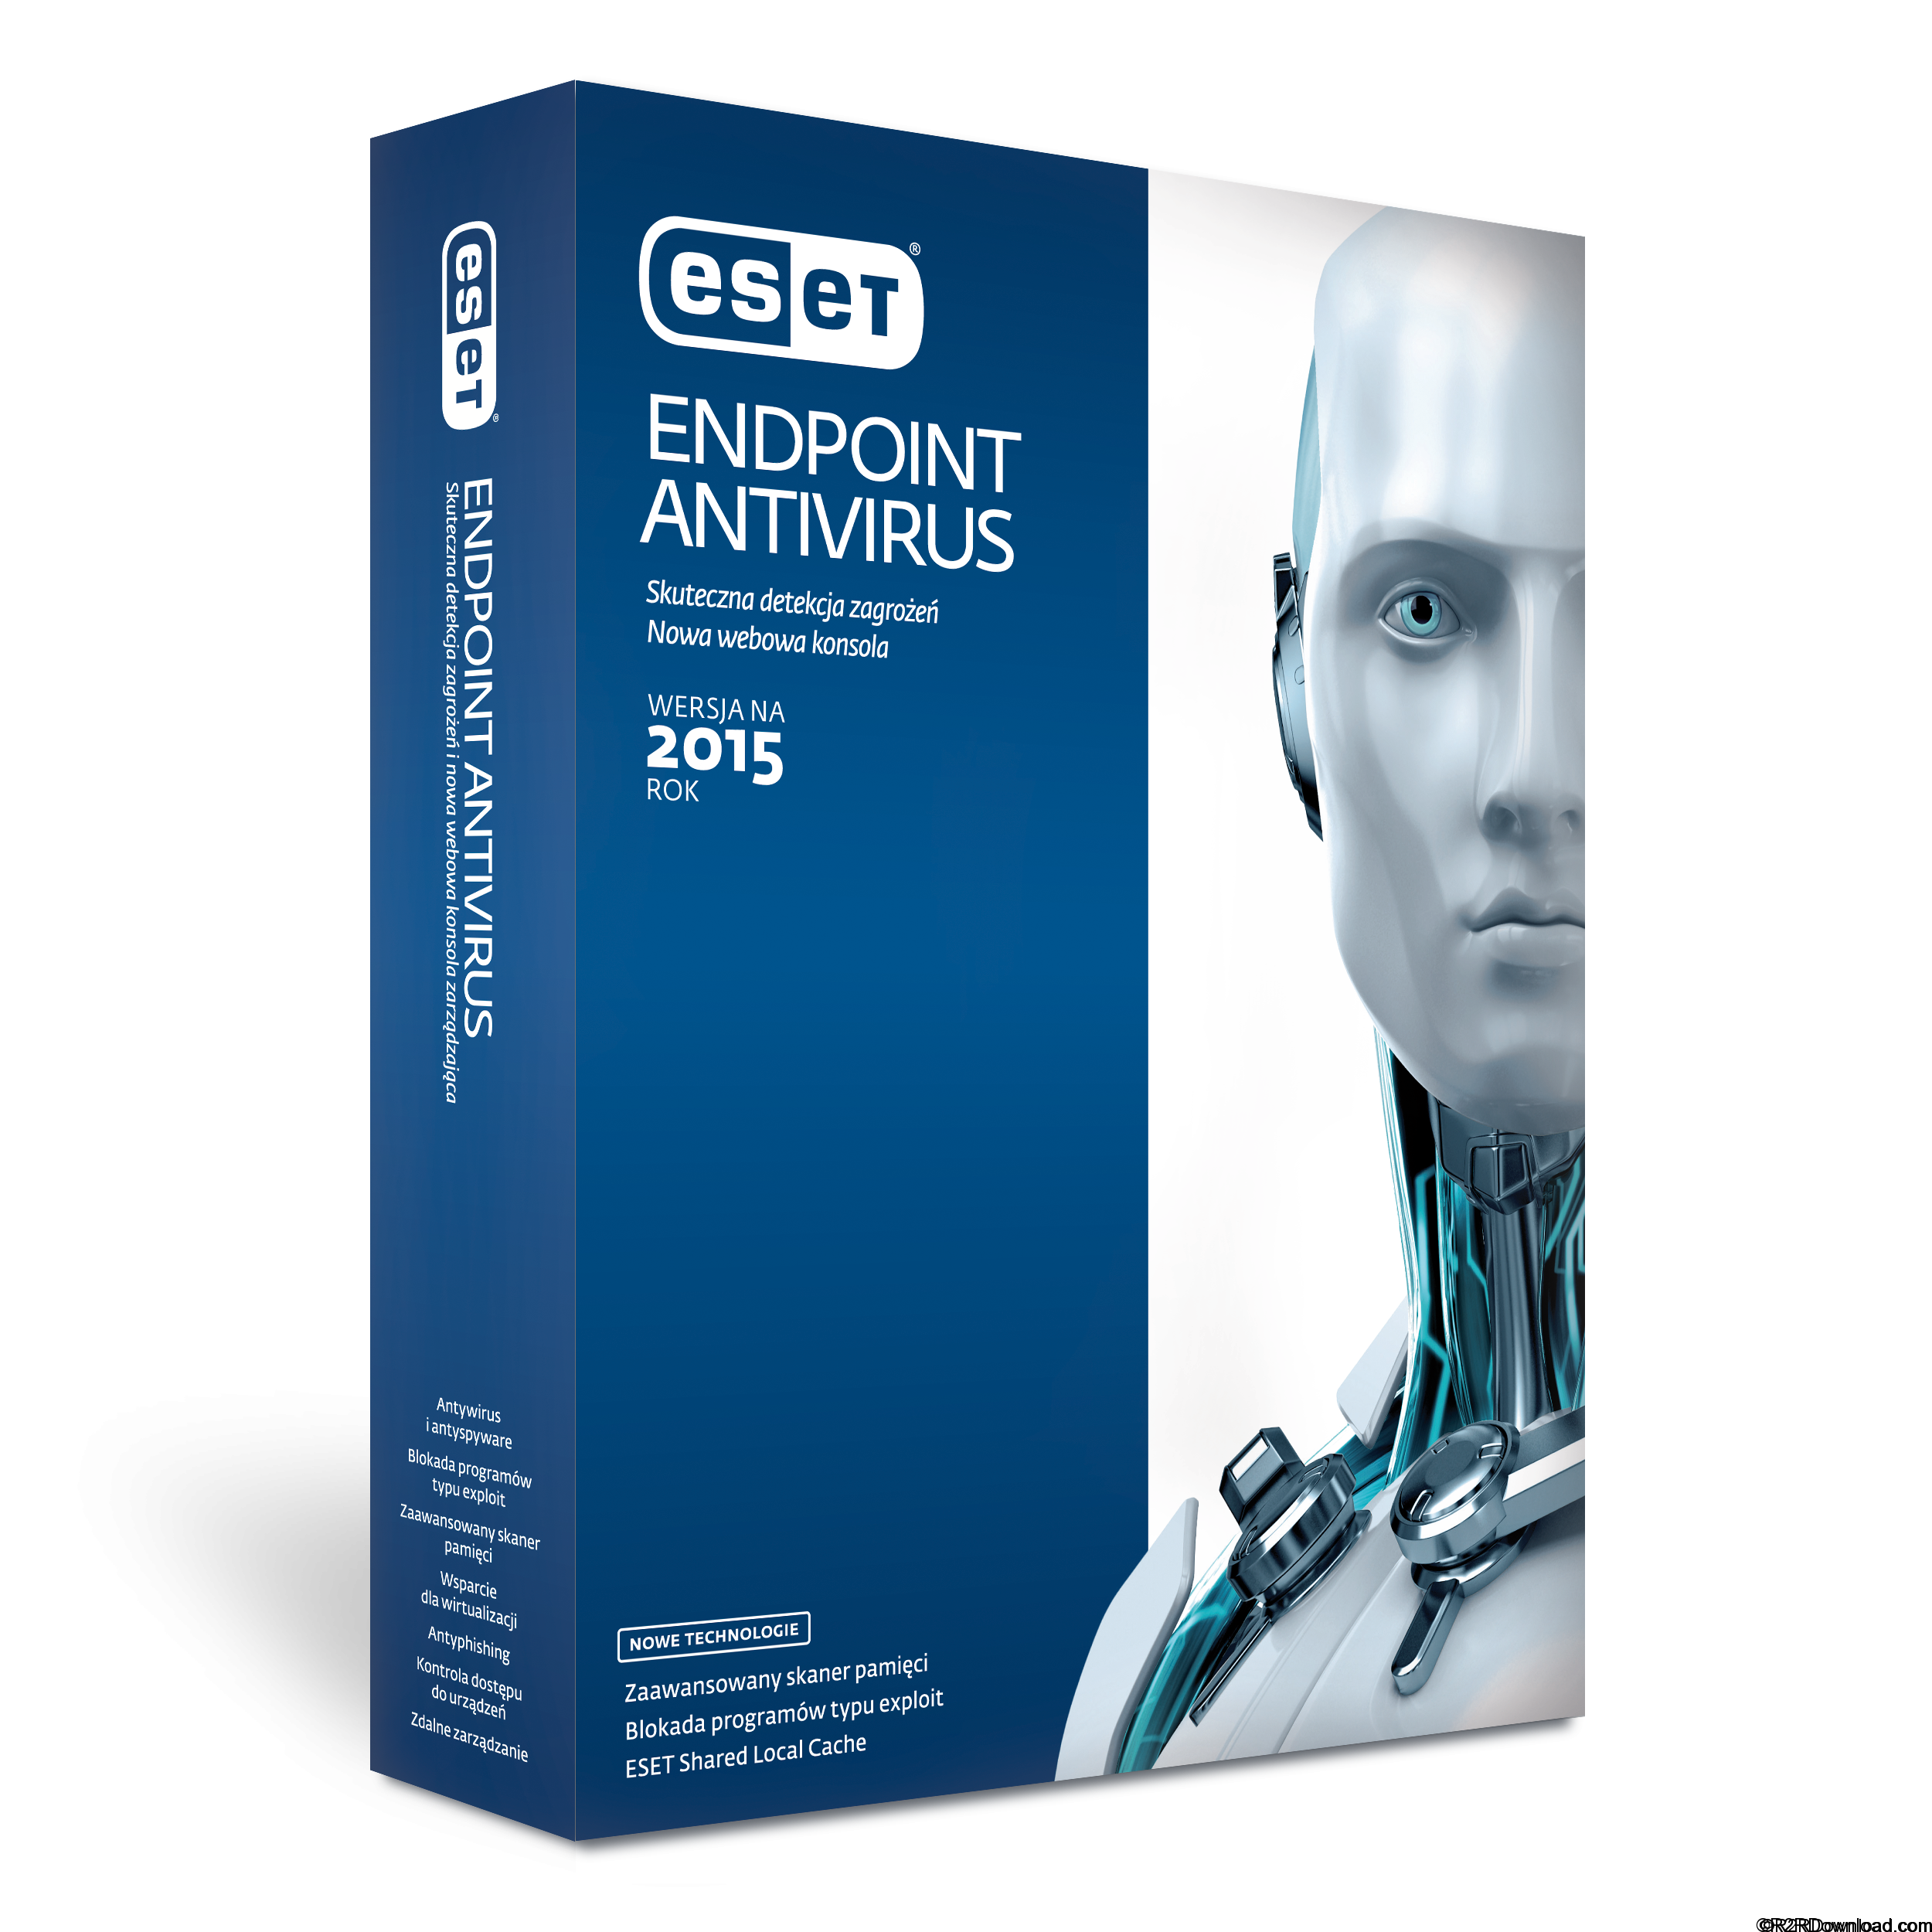 ESET Endpoint Antivirus 6.5 Free Download